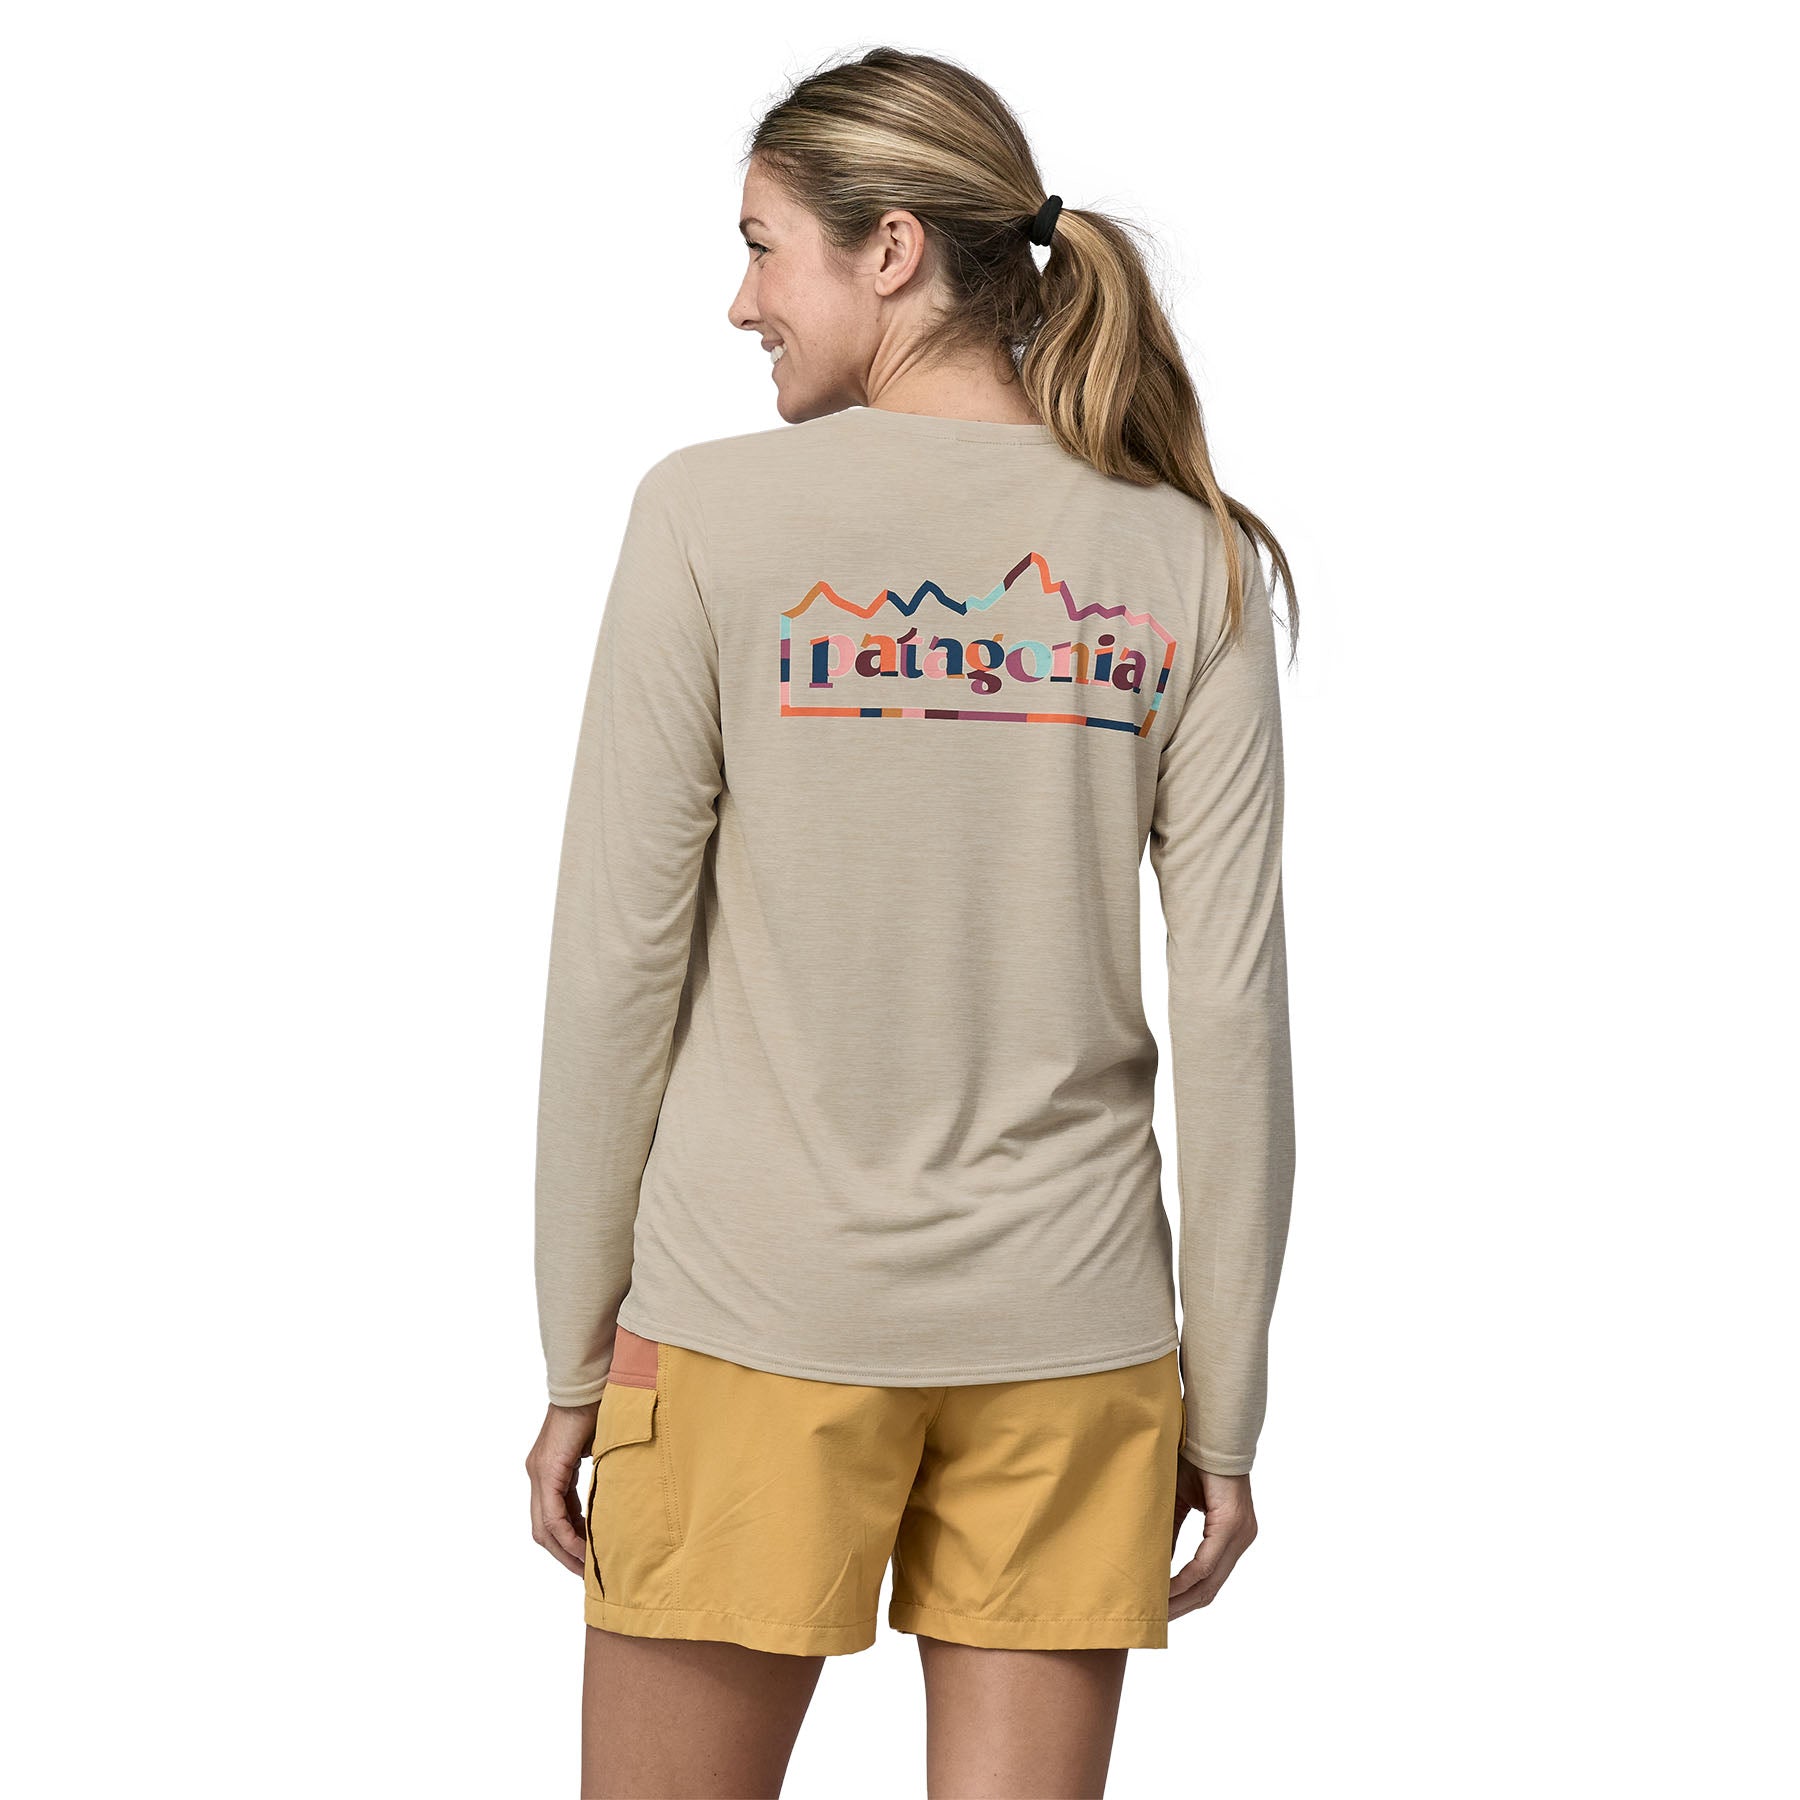 Women's Long-Sleeved Capilene® Cool Daily Graphic Shirt